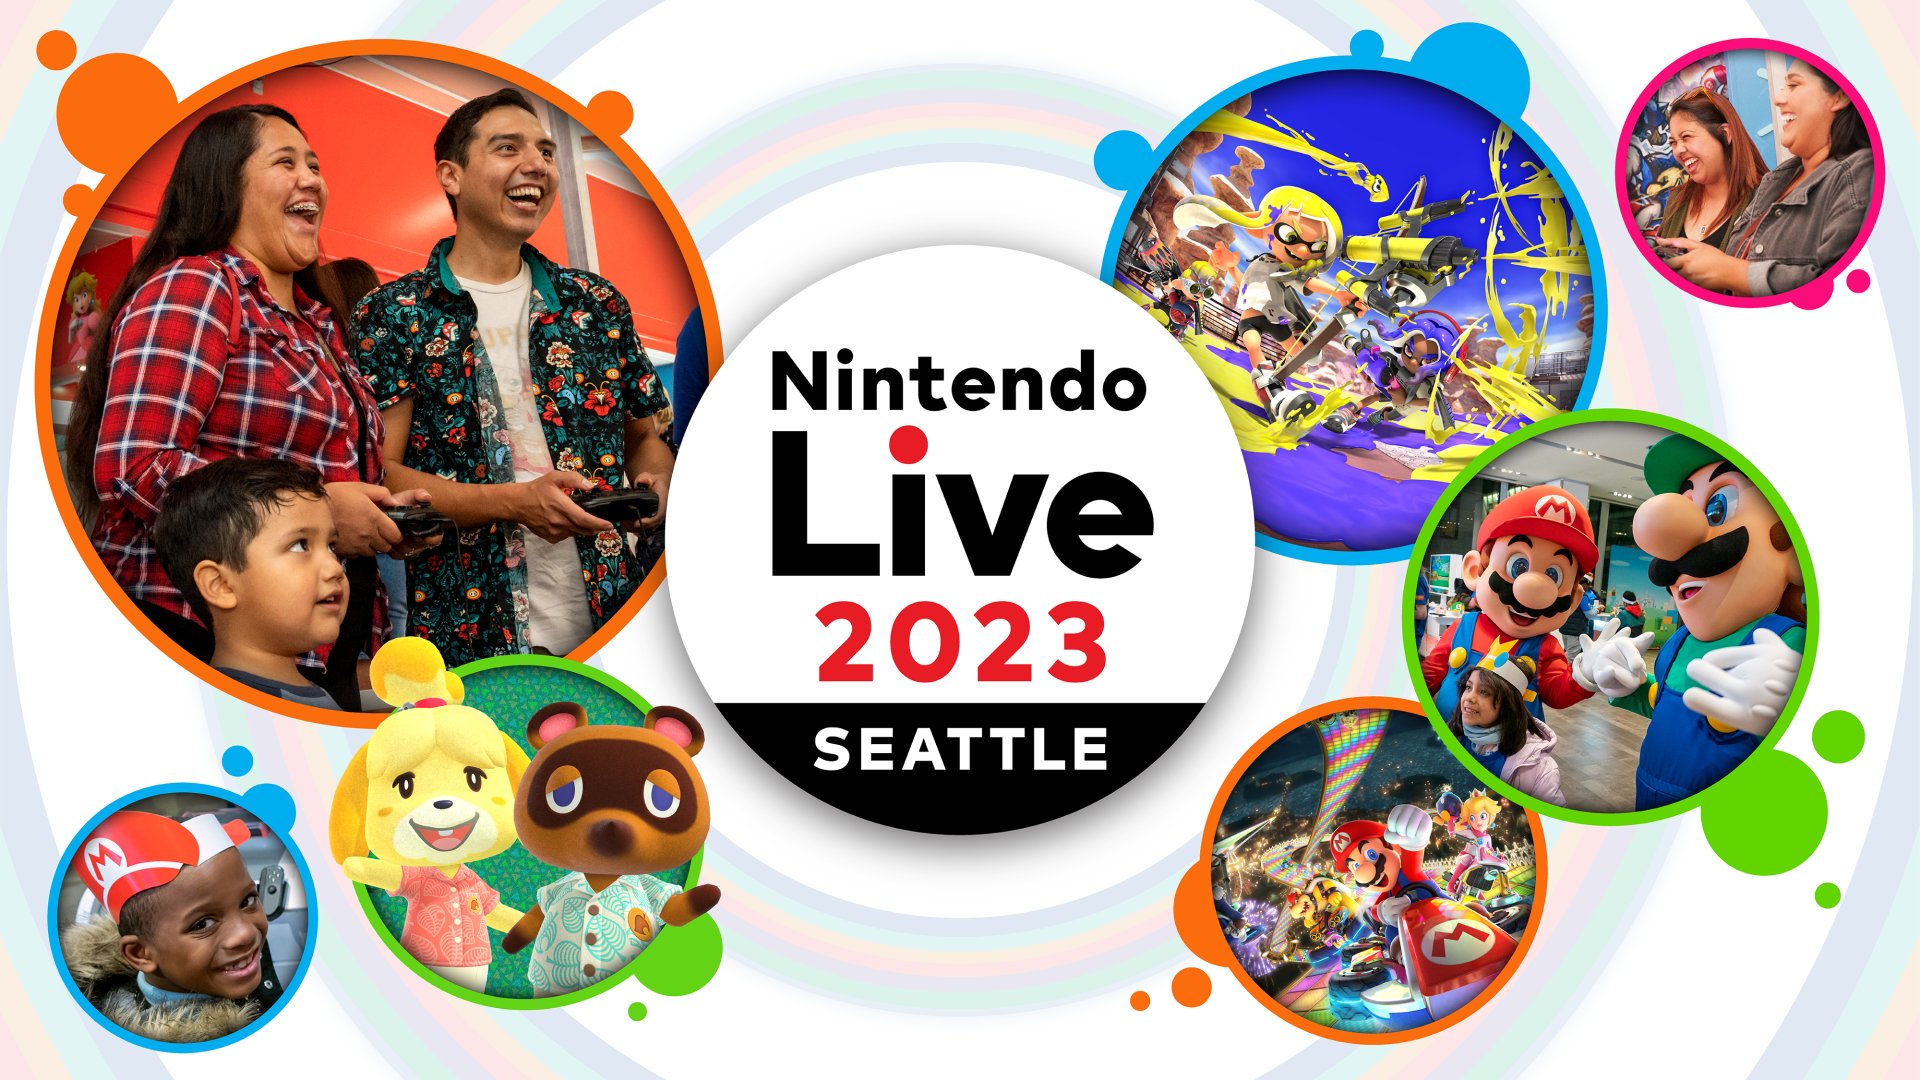 Announcing Nintendo Live 2023 Seattle